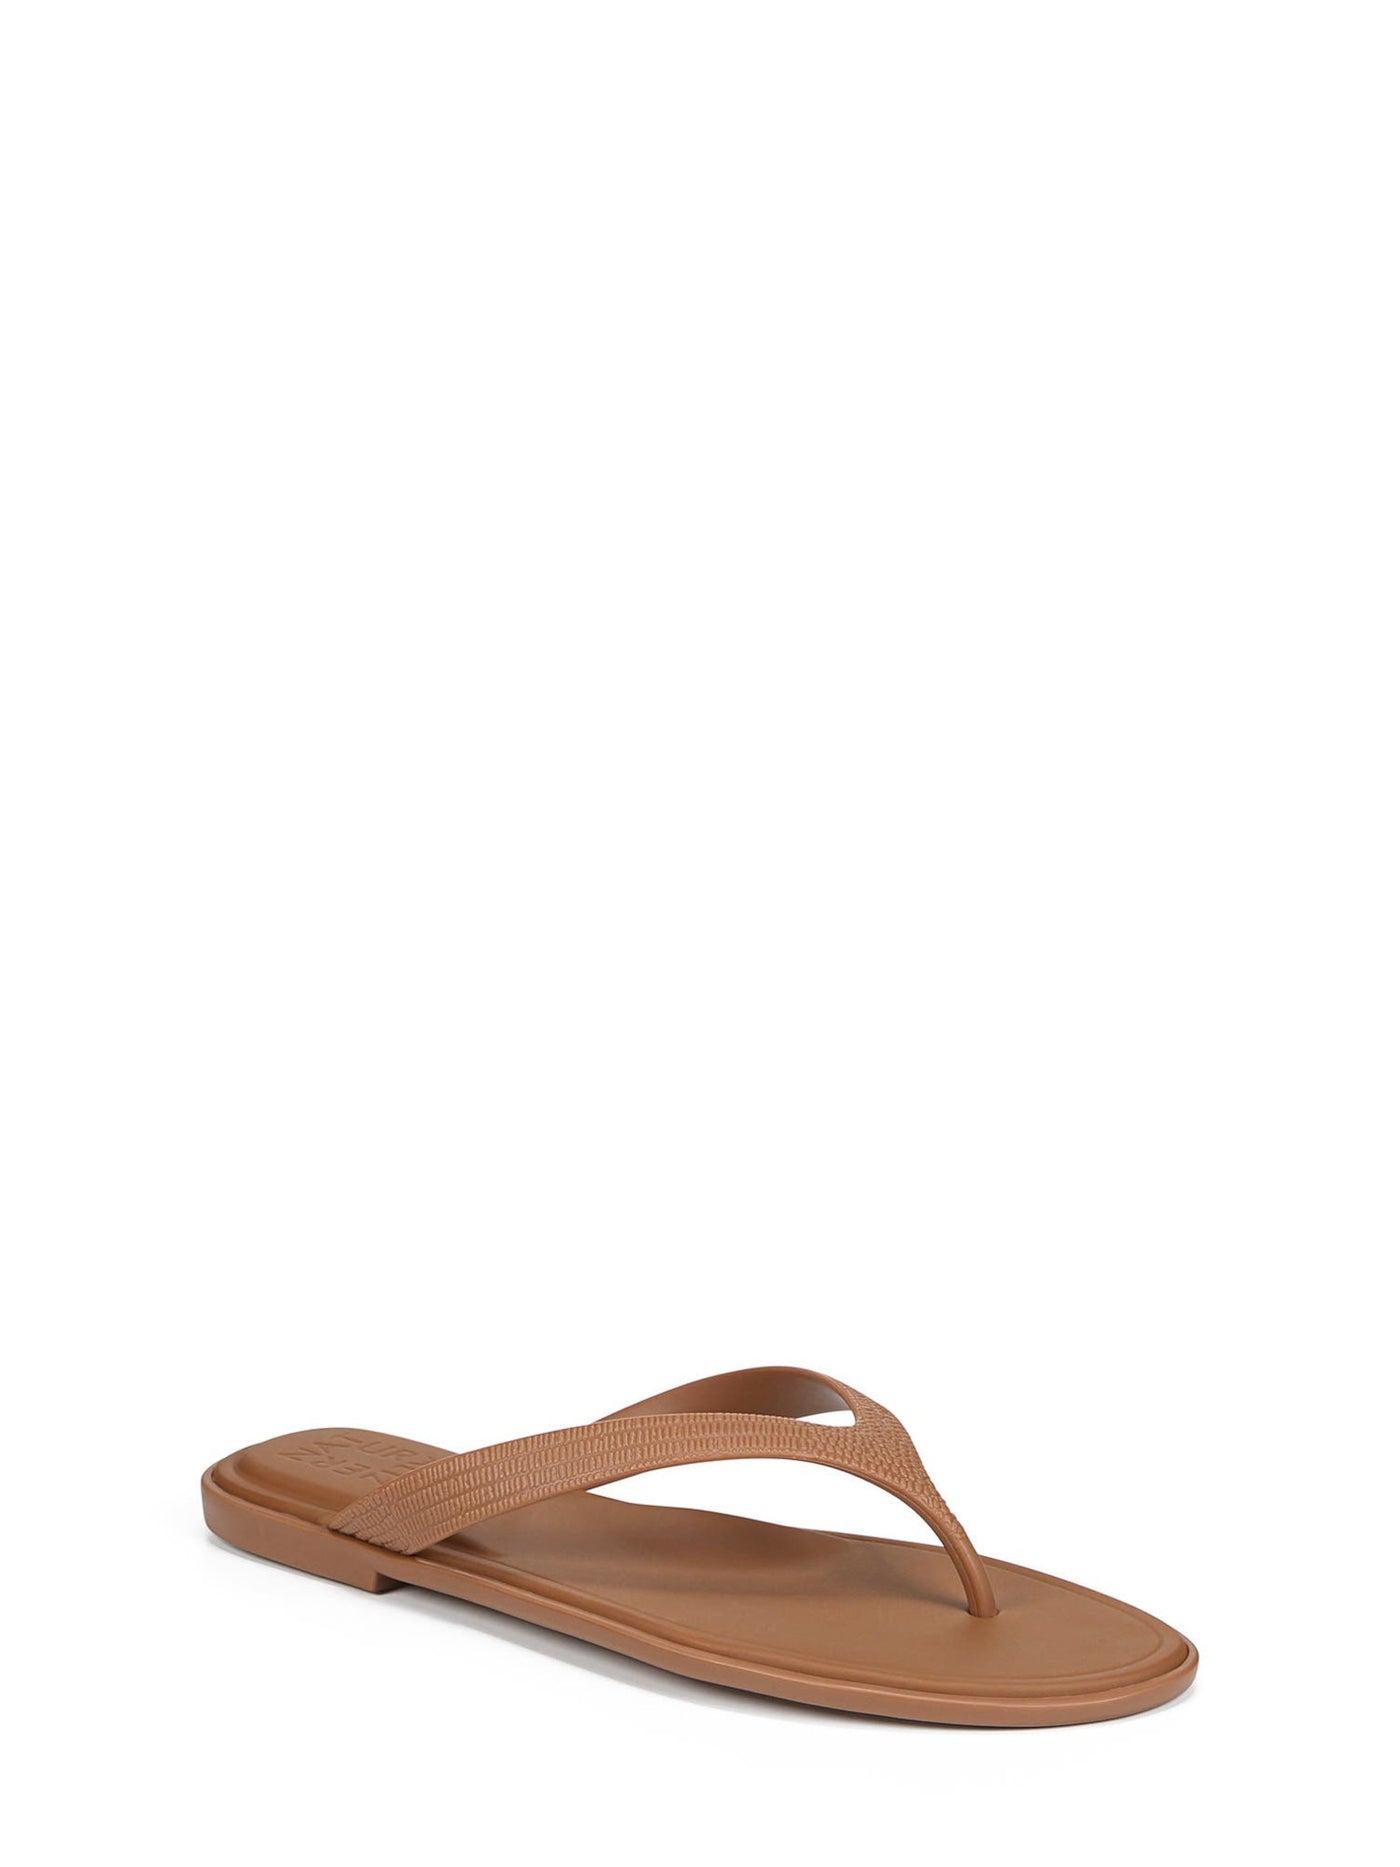 NATURALIZER SHOE Womens Brown Comfort Jelly Sandal Padded Non-Slip Jemm Open Toe Slip On Thong Sandals 6 M